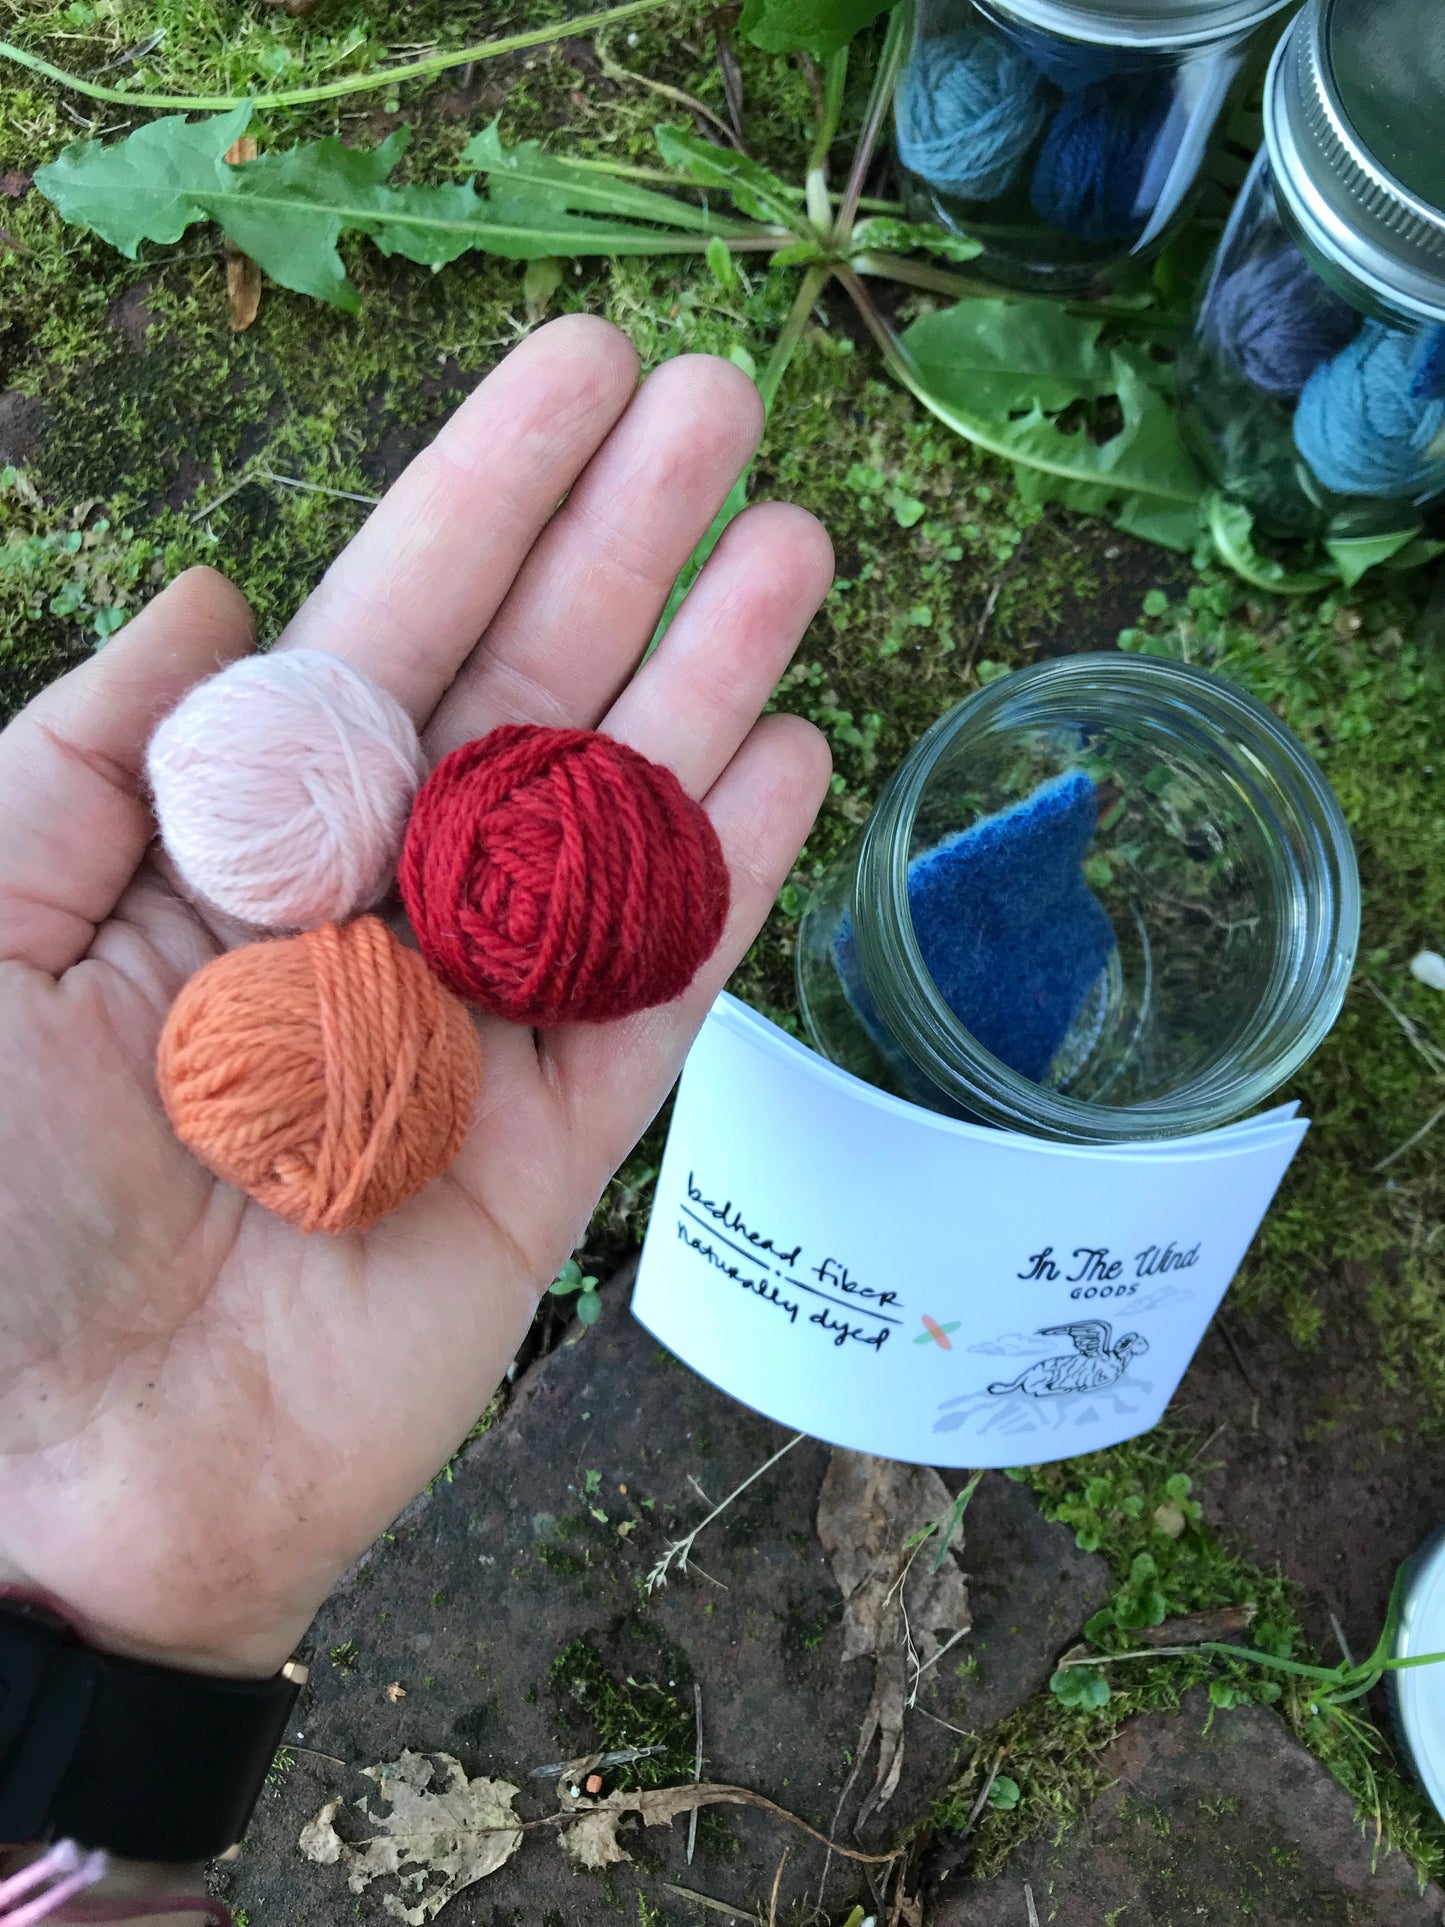 Complete mending kit — deanna lynch textiles